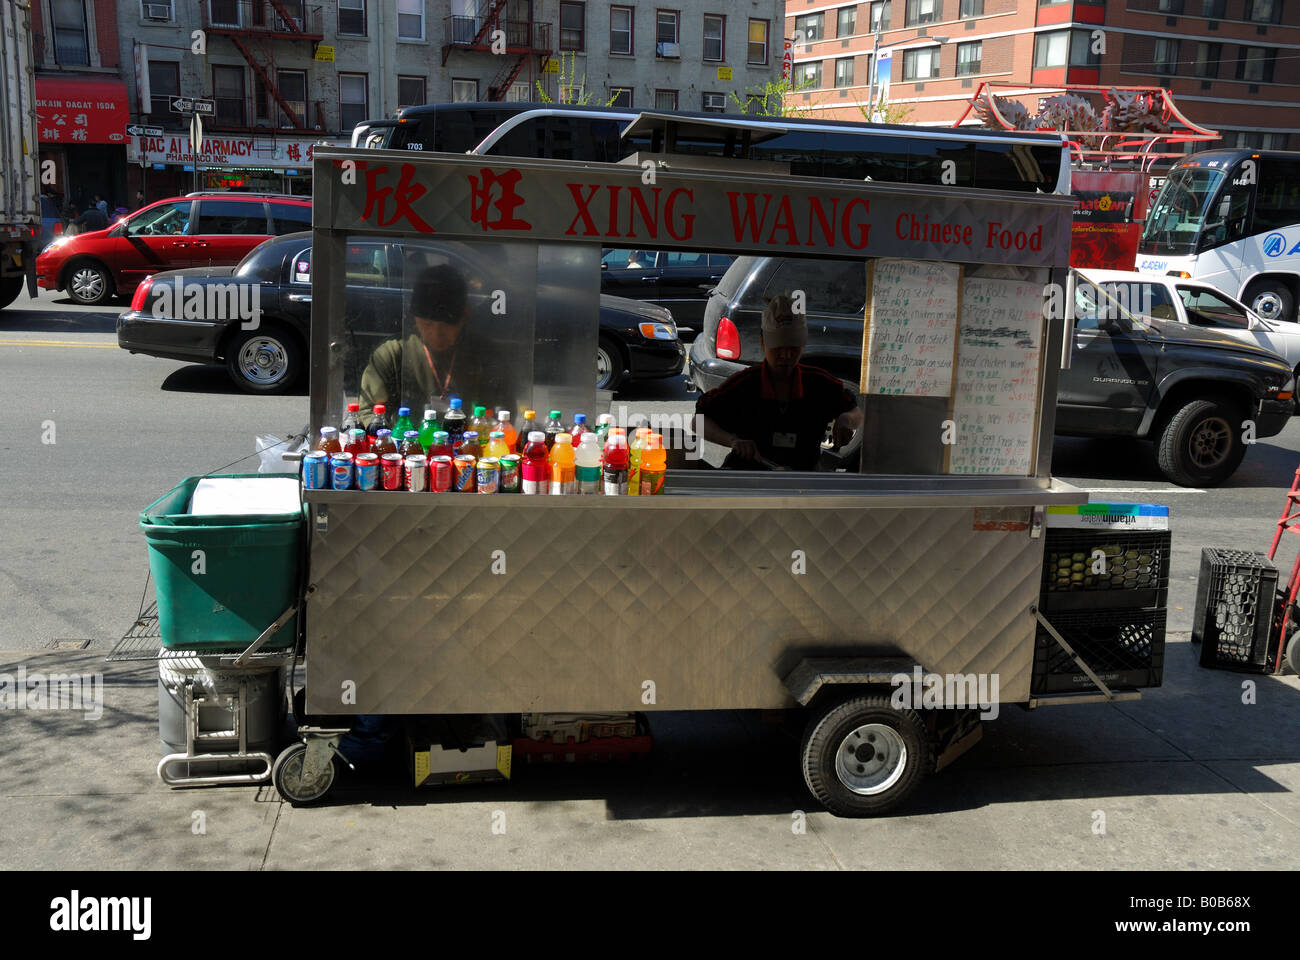 Chinesisches Essen Verkäufer in China Town, New York Stockfoto